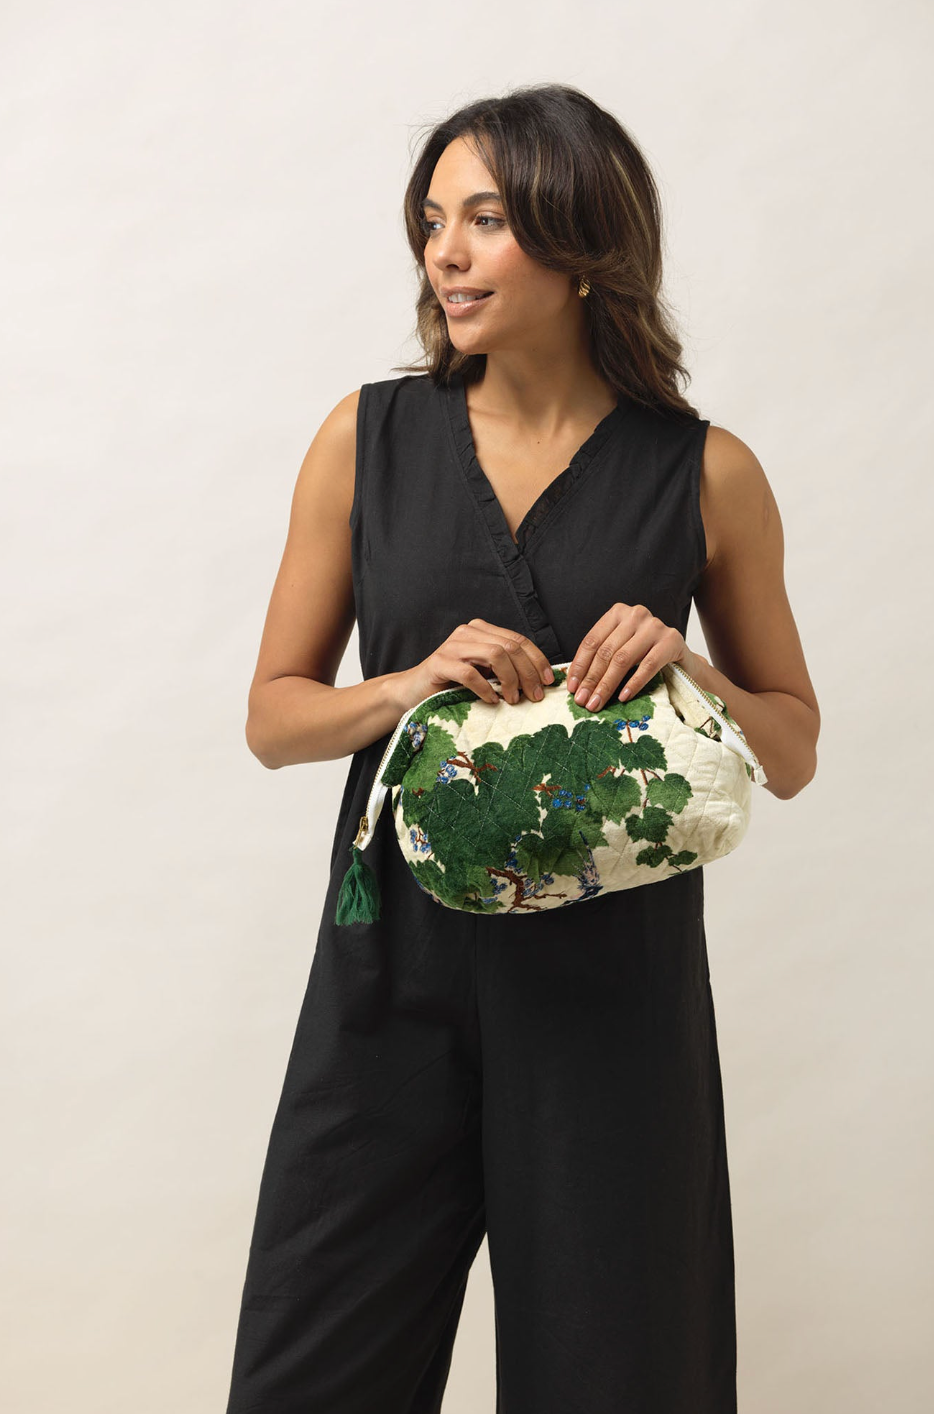 Luxe Cotton Velvet Make-up Pouch Bag by One Hundred Stars in Green Acer Print - MBGACRGRN